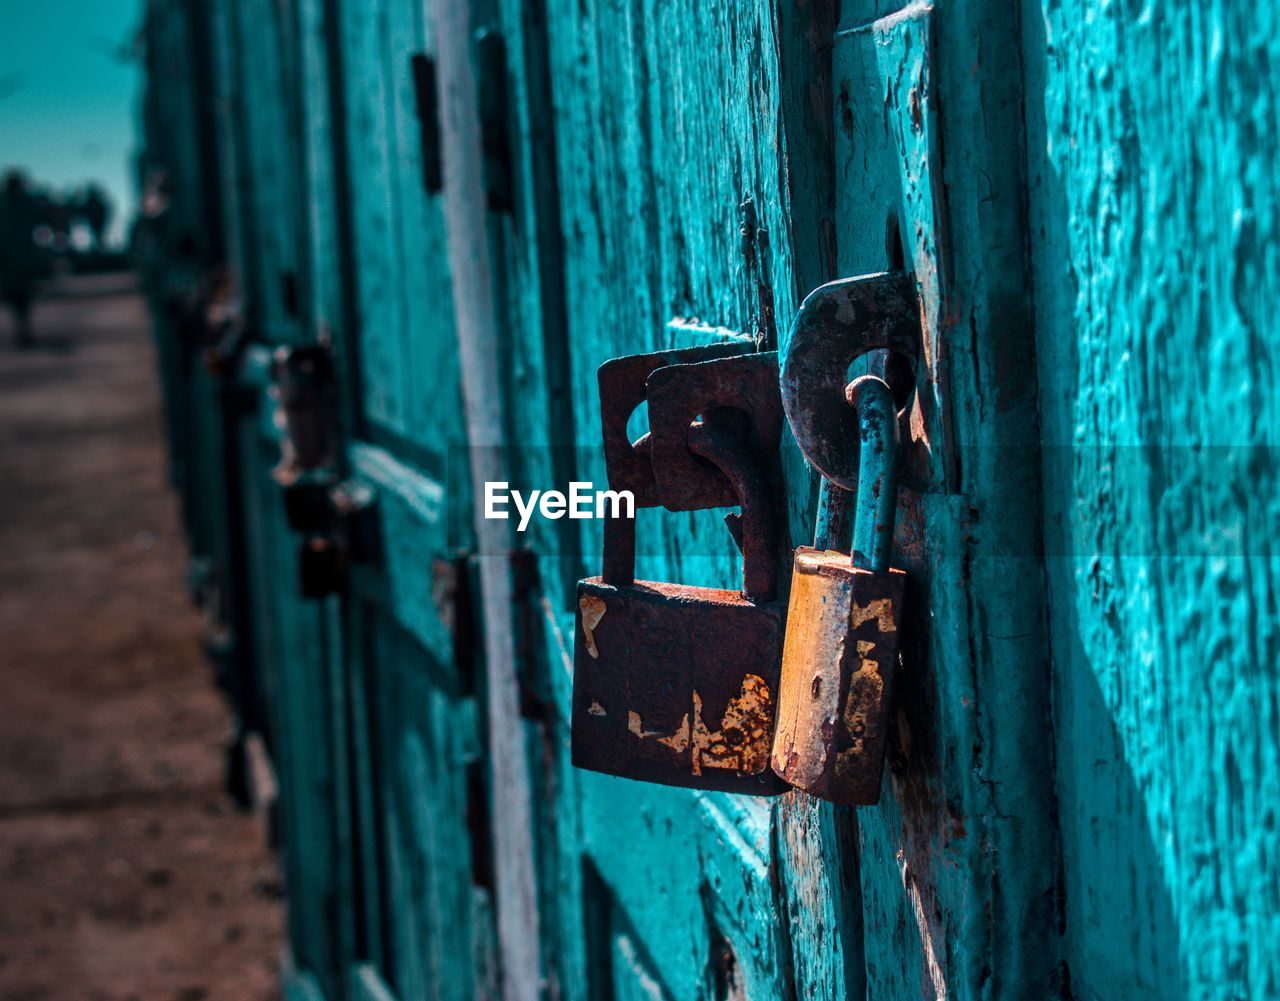 Close-up of rusty padlocks on turquoise doors